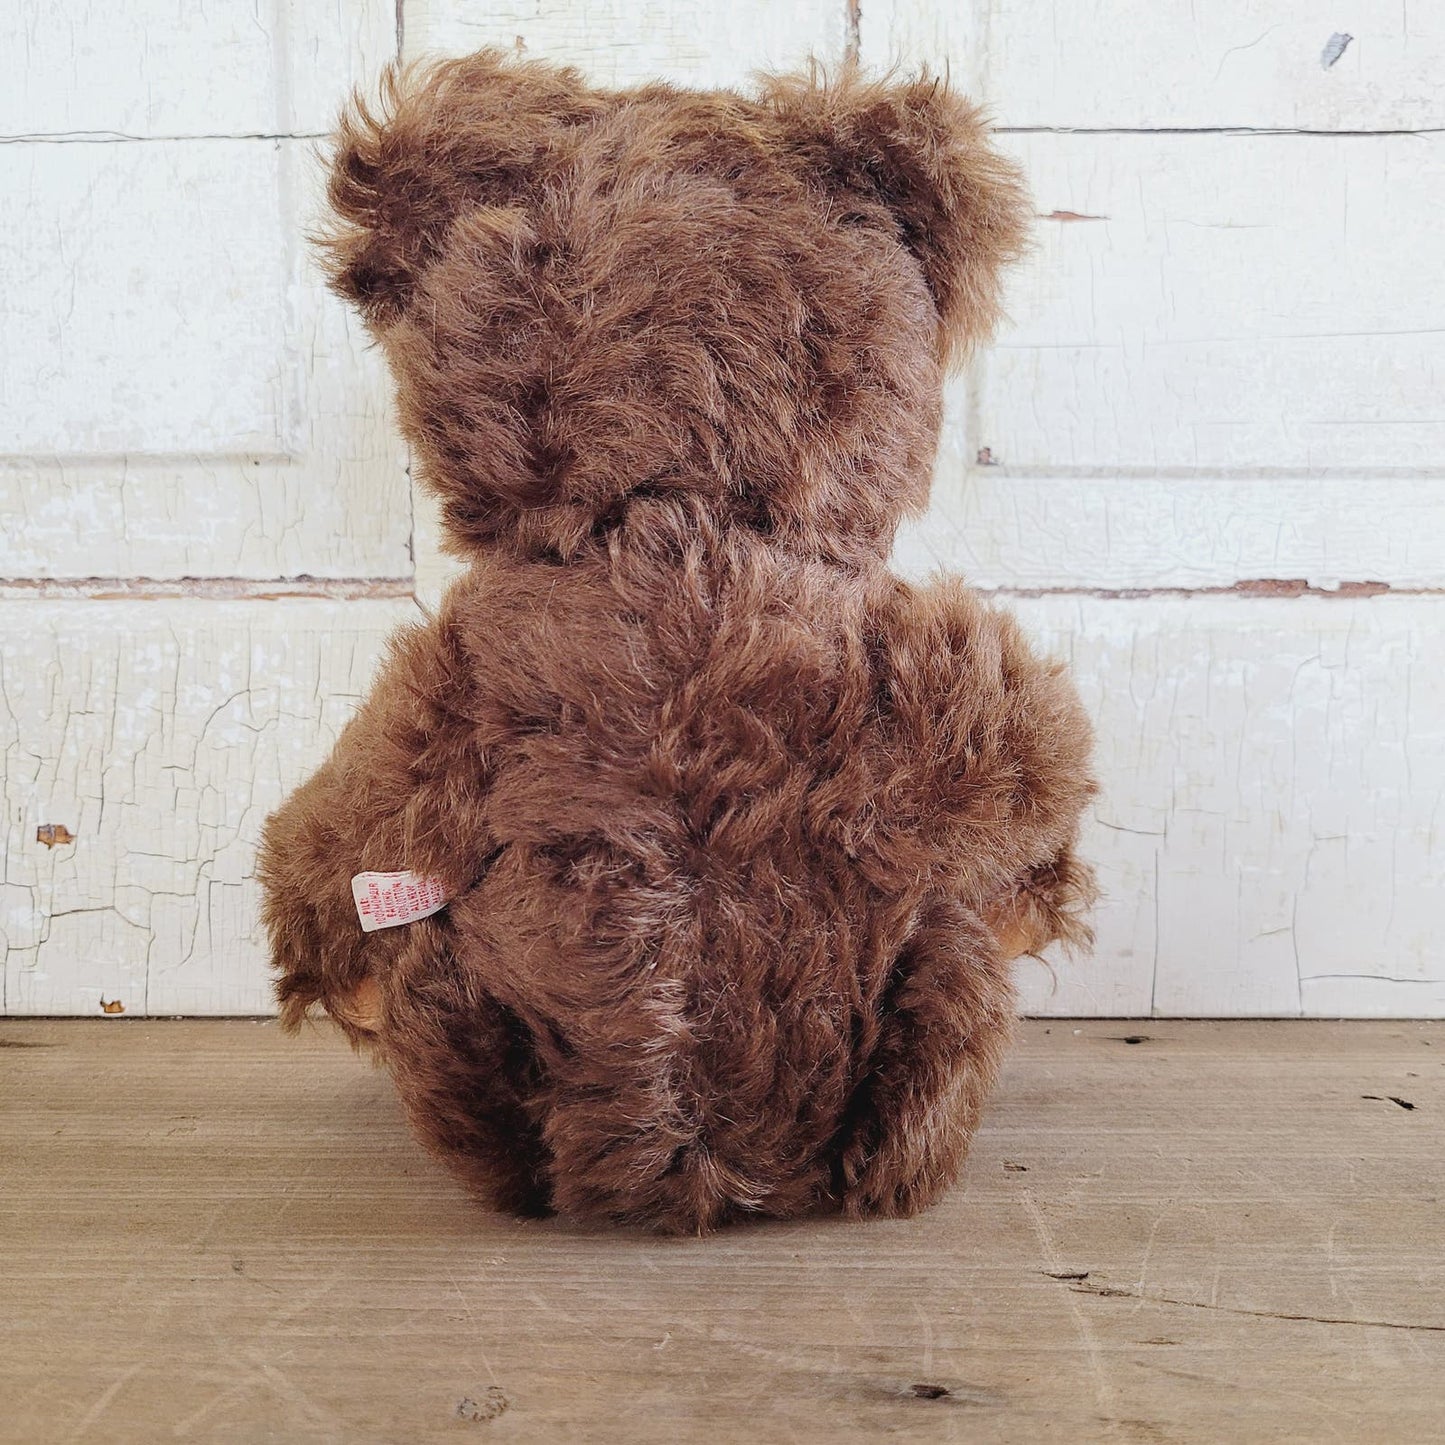 Vintage Hermann Teddy Original Brown Bear Limited Edition